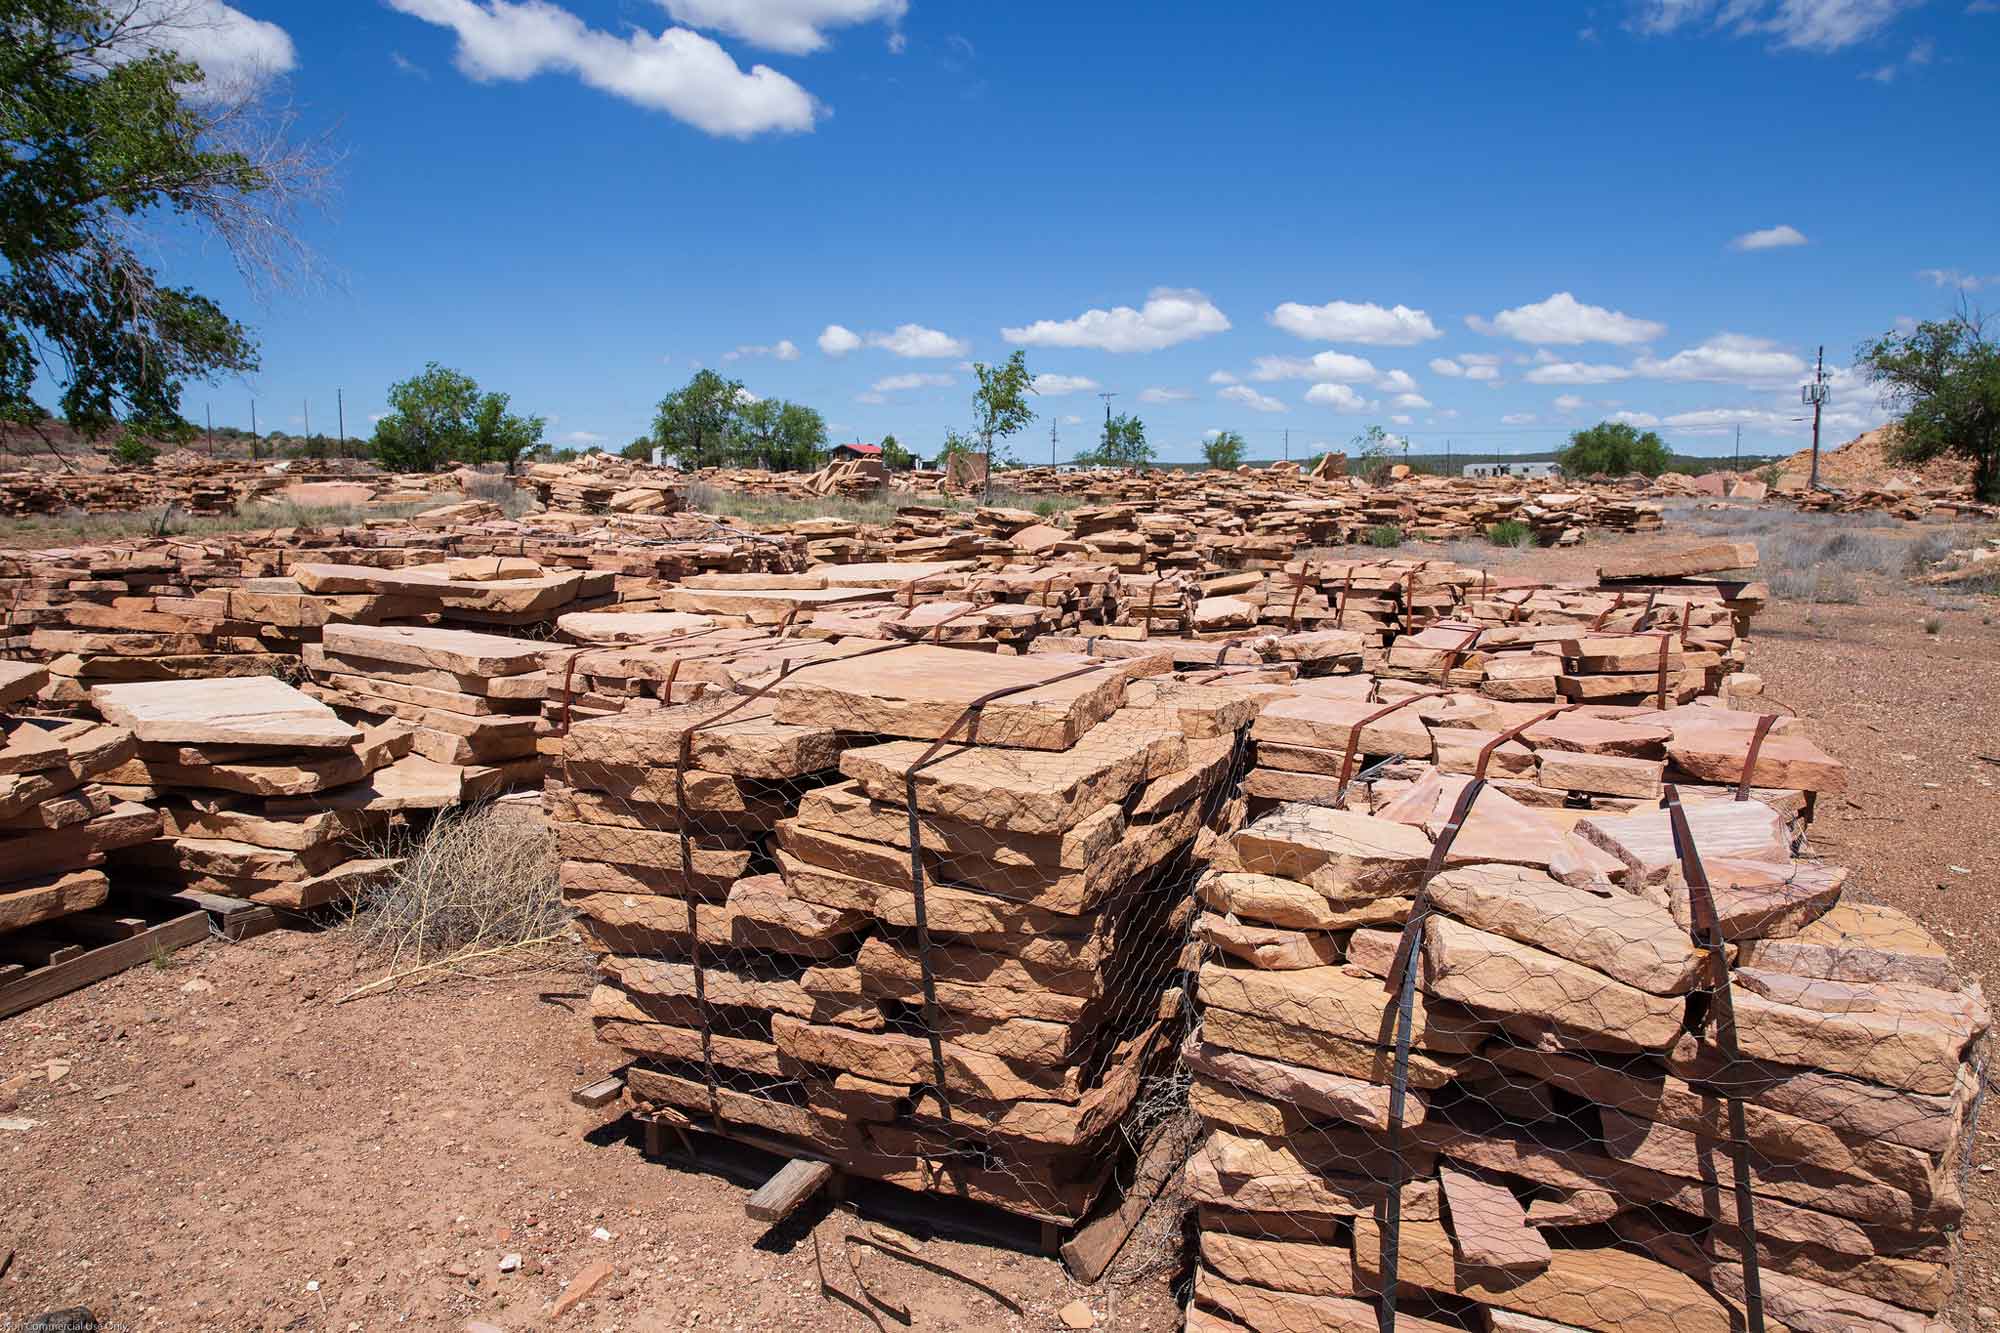 Photograph of stacks of sandstone flagstone slabs at Ash Fork, Arizona.